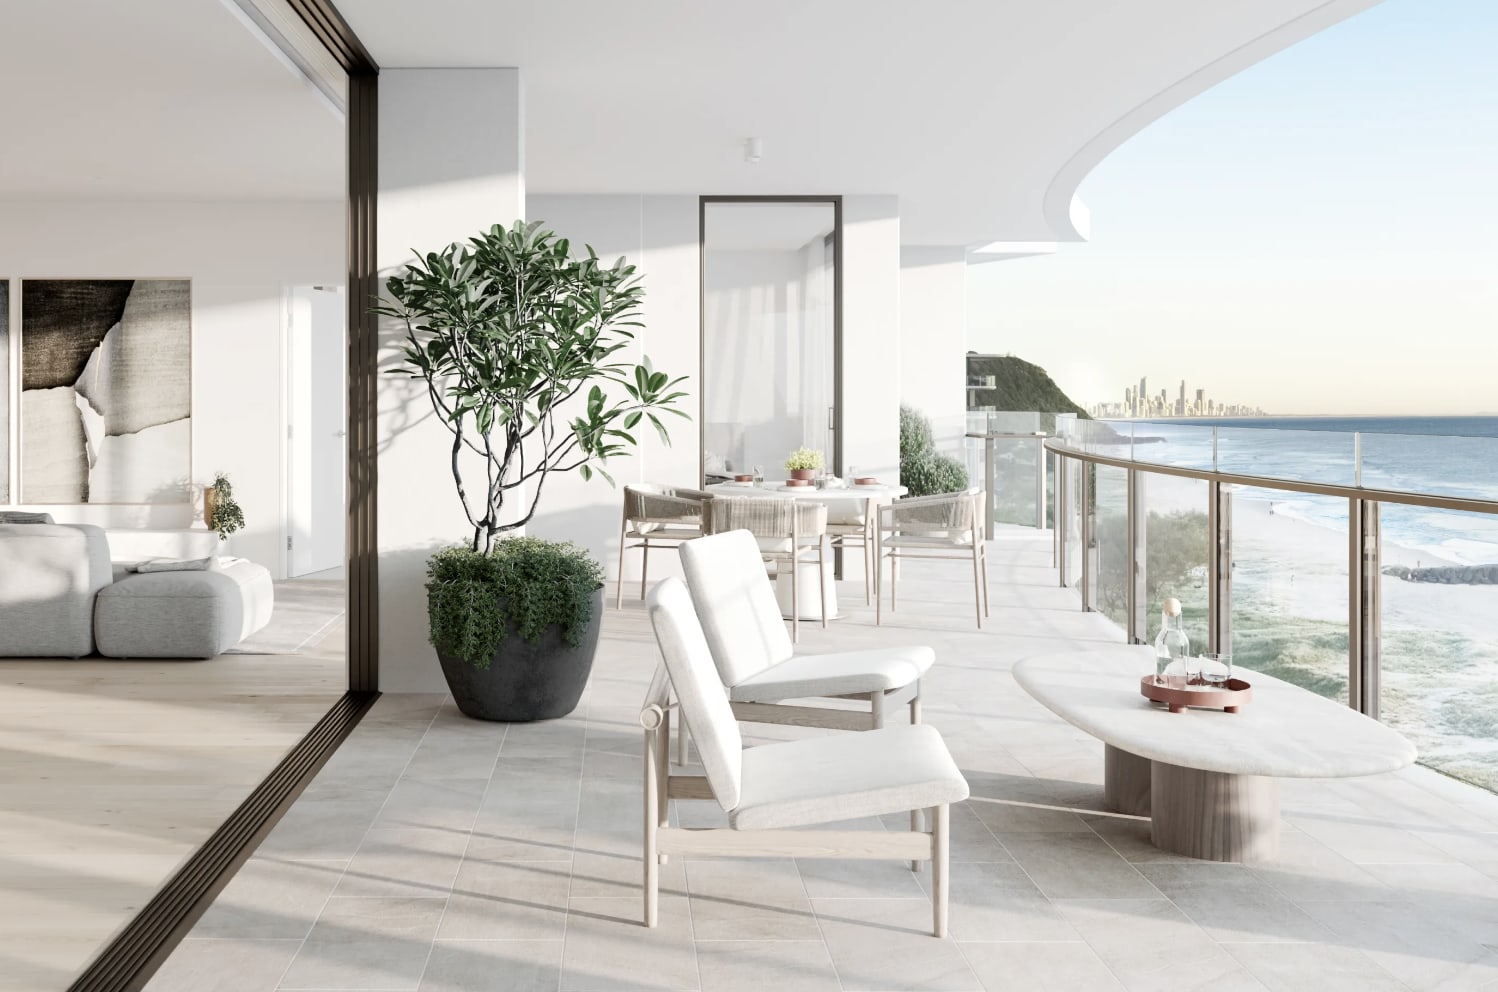 Marquee net $100 million in sales at La Belle Palm Beach apartment development